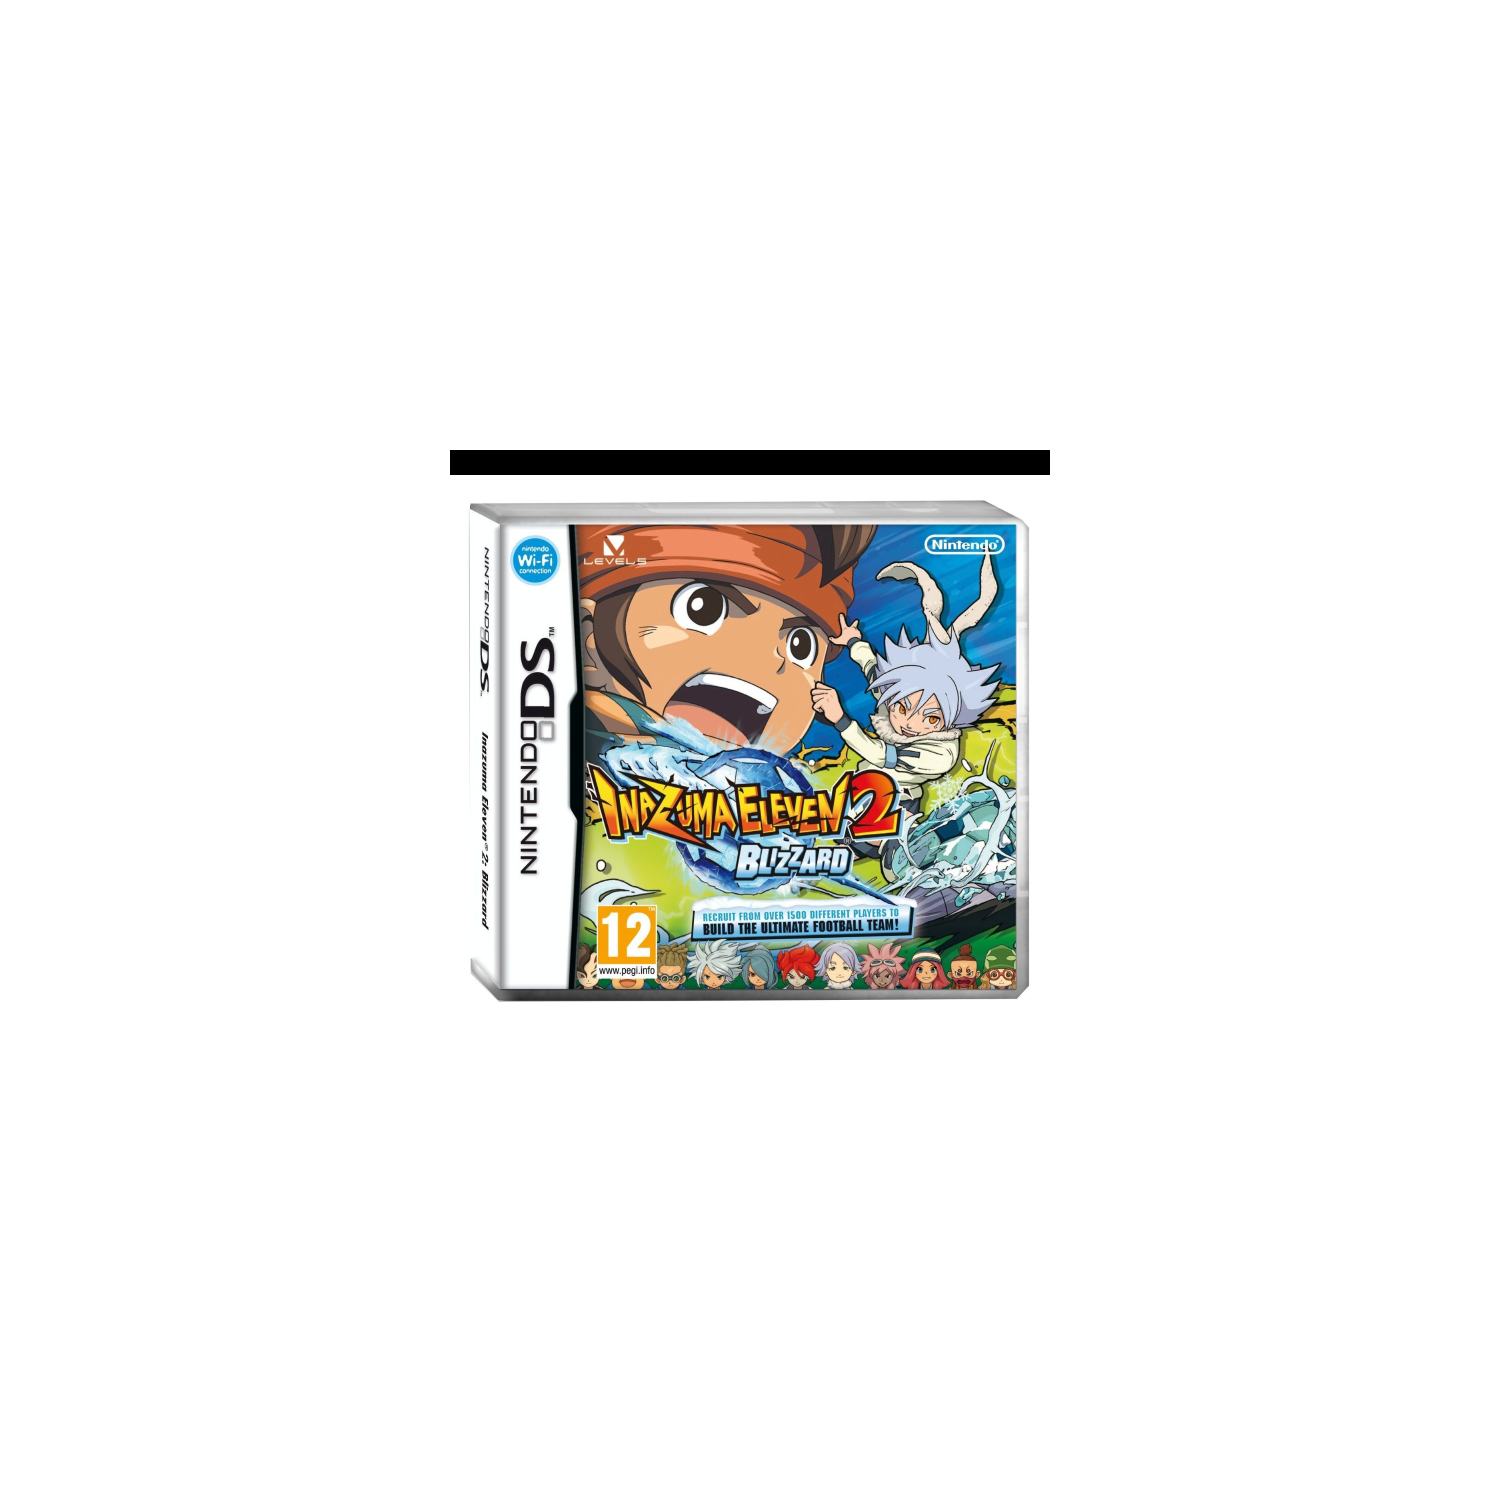 Inazuma Eleven 2 Blizzard (European Release) (Nintendo DS)